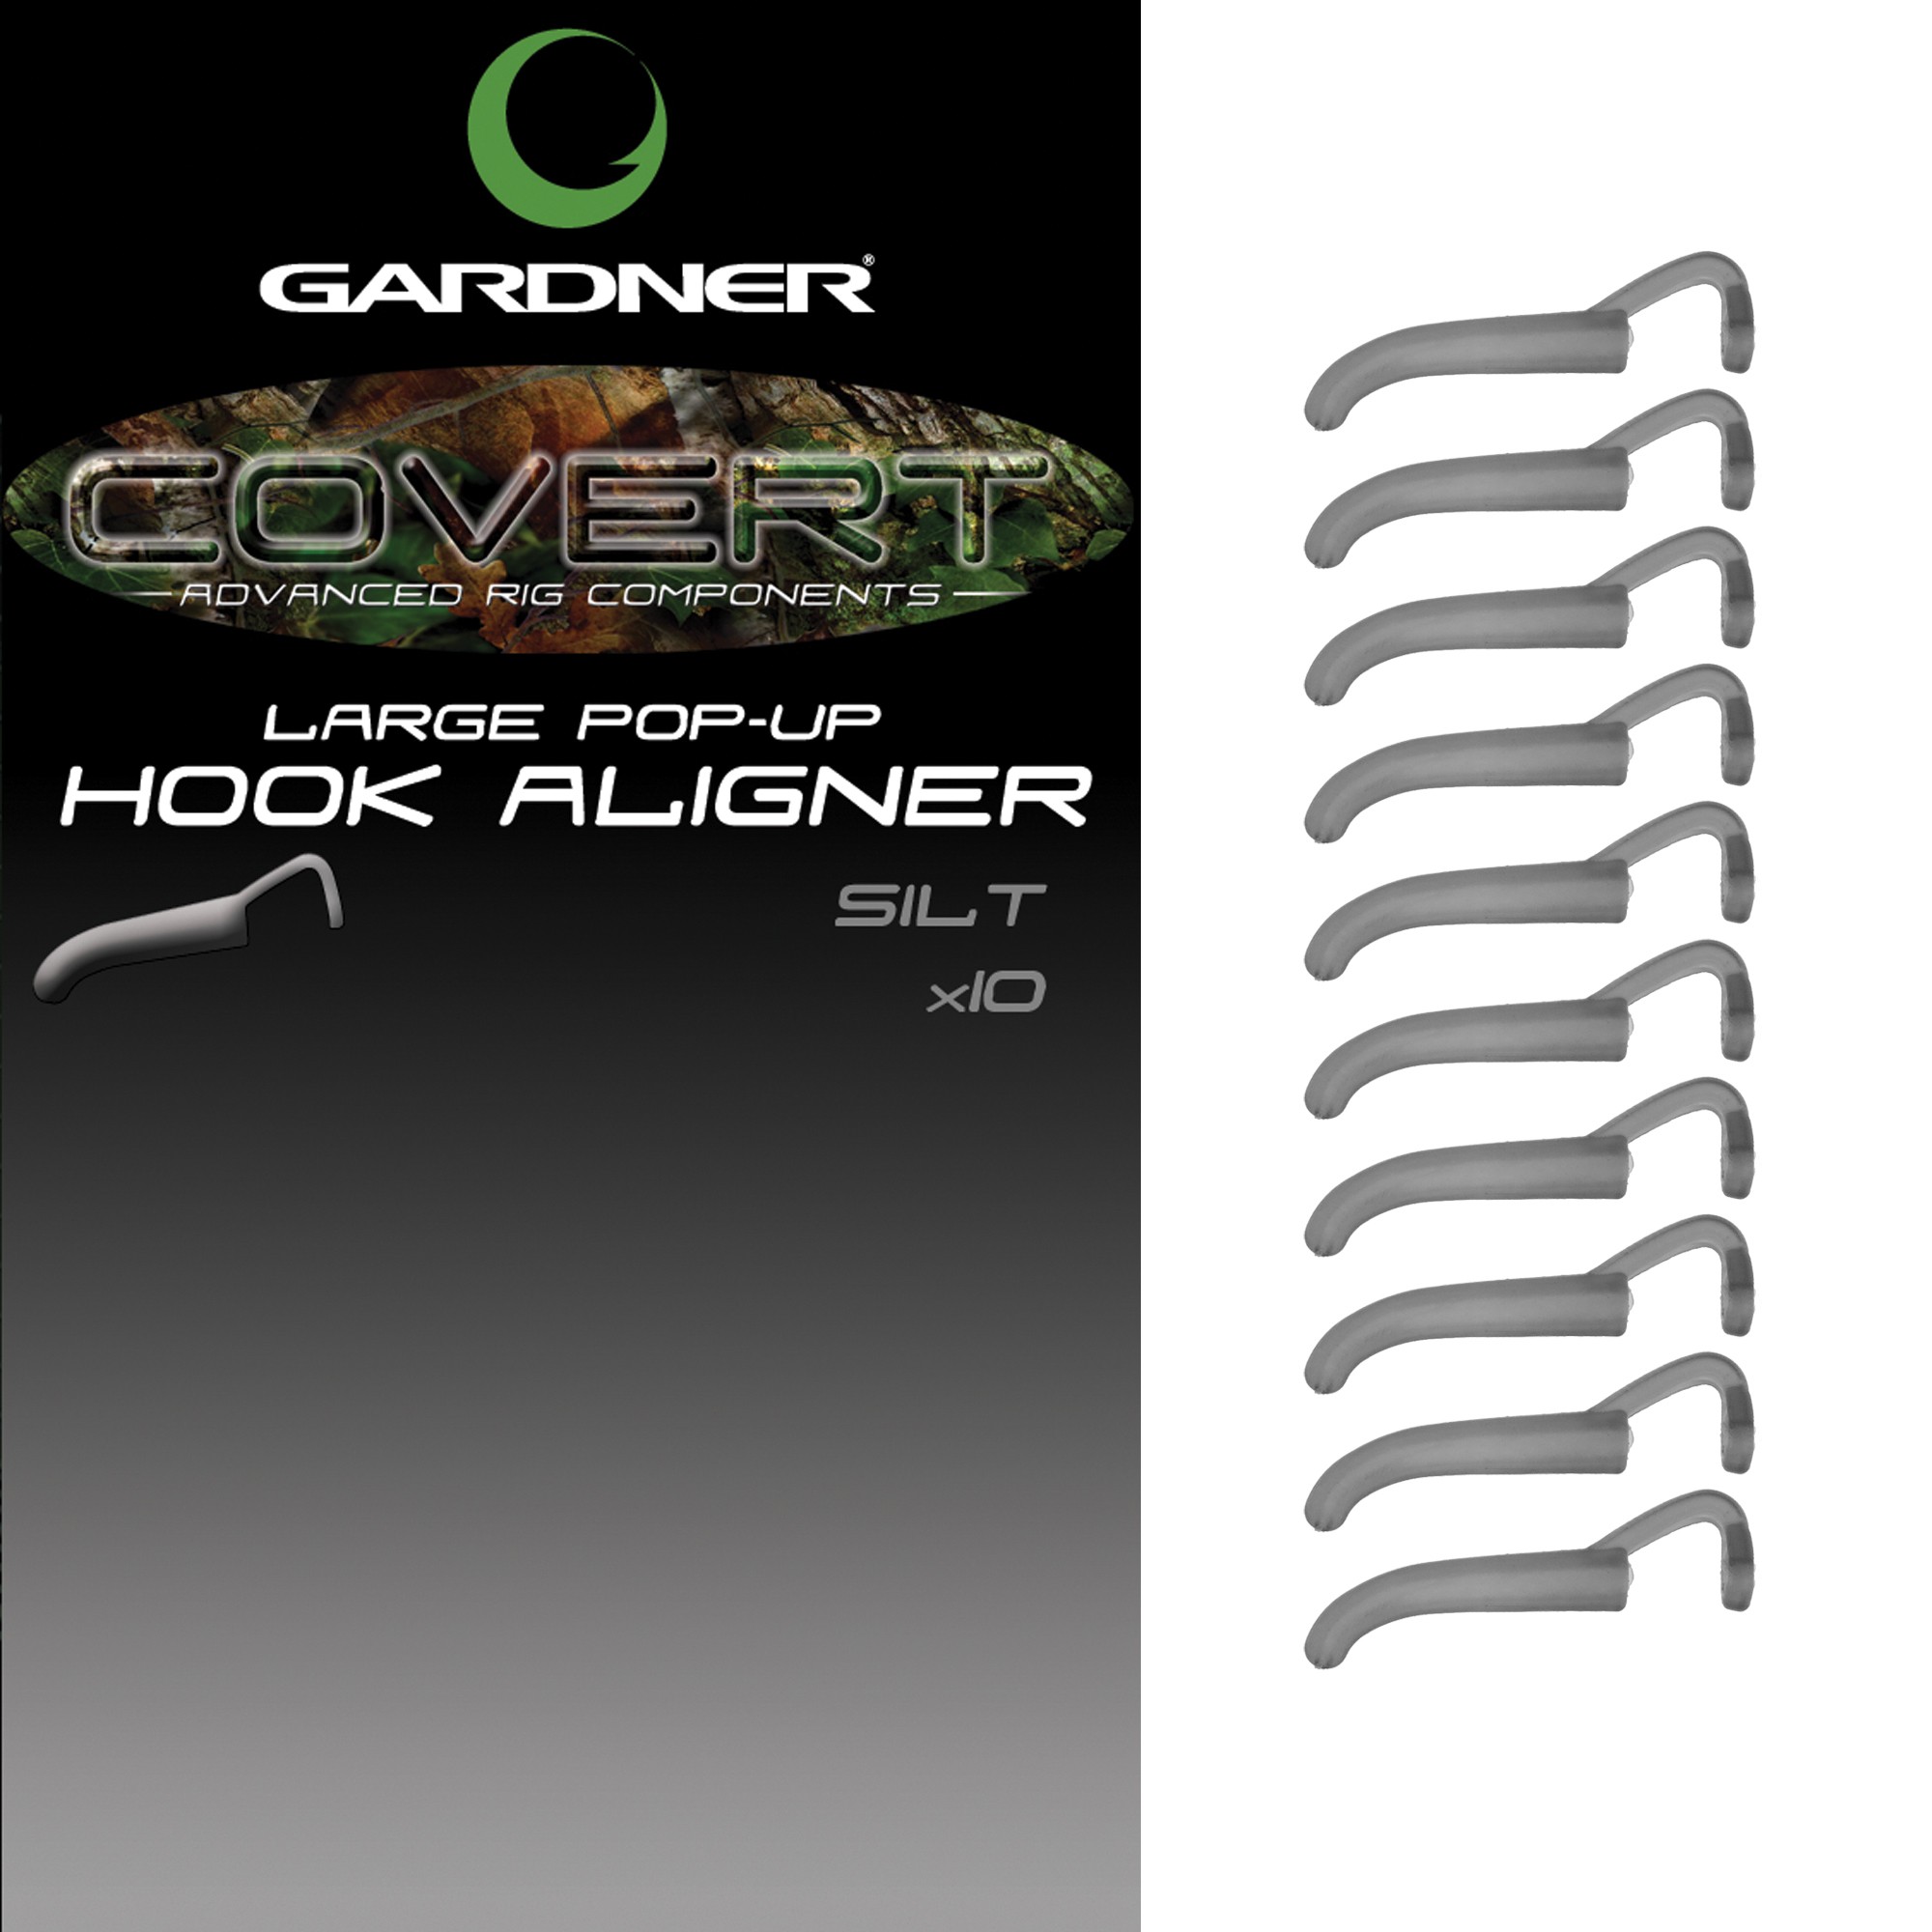 Трубка для крючка Gardner Covert pop-up hook aligner large c-thru black/silt - фото 1